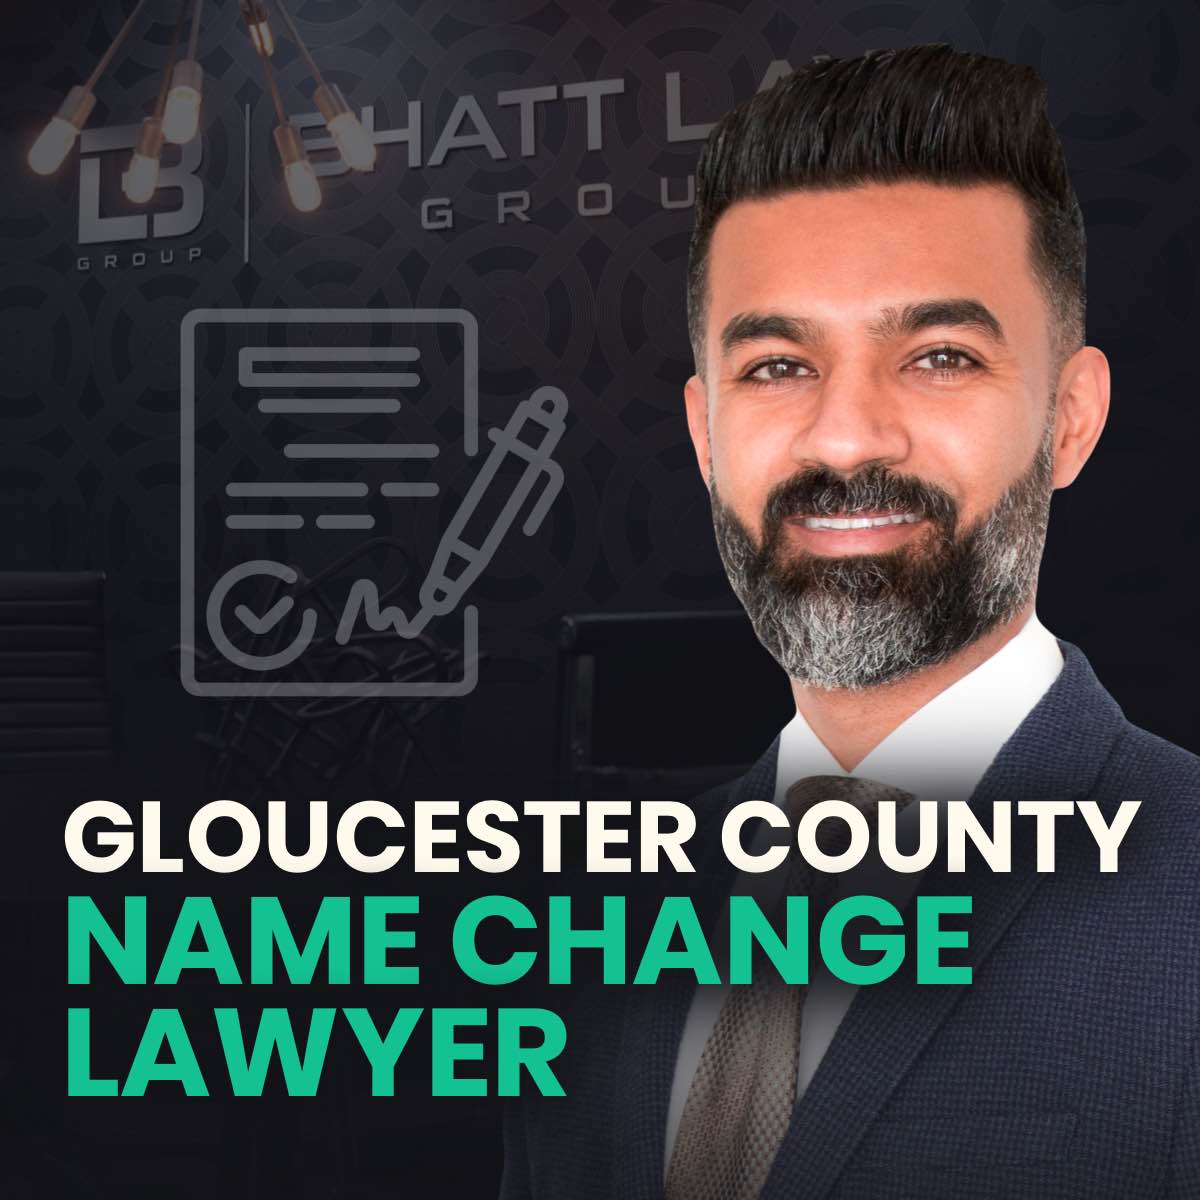 Gloucester County Name Change Lawyer